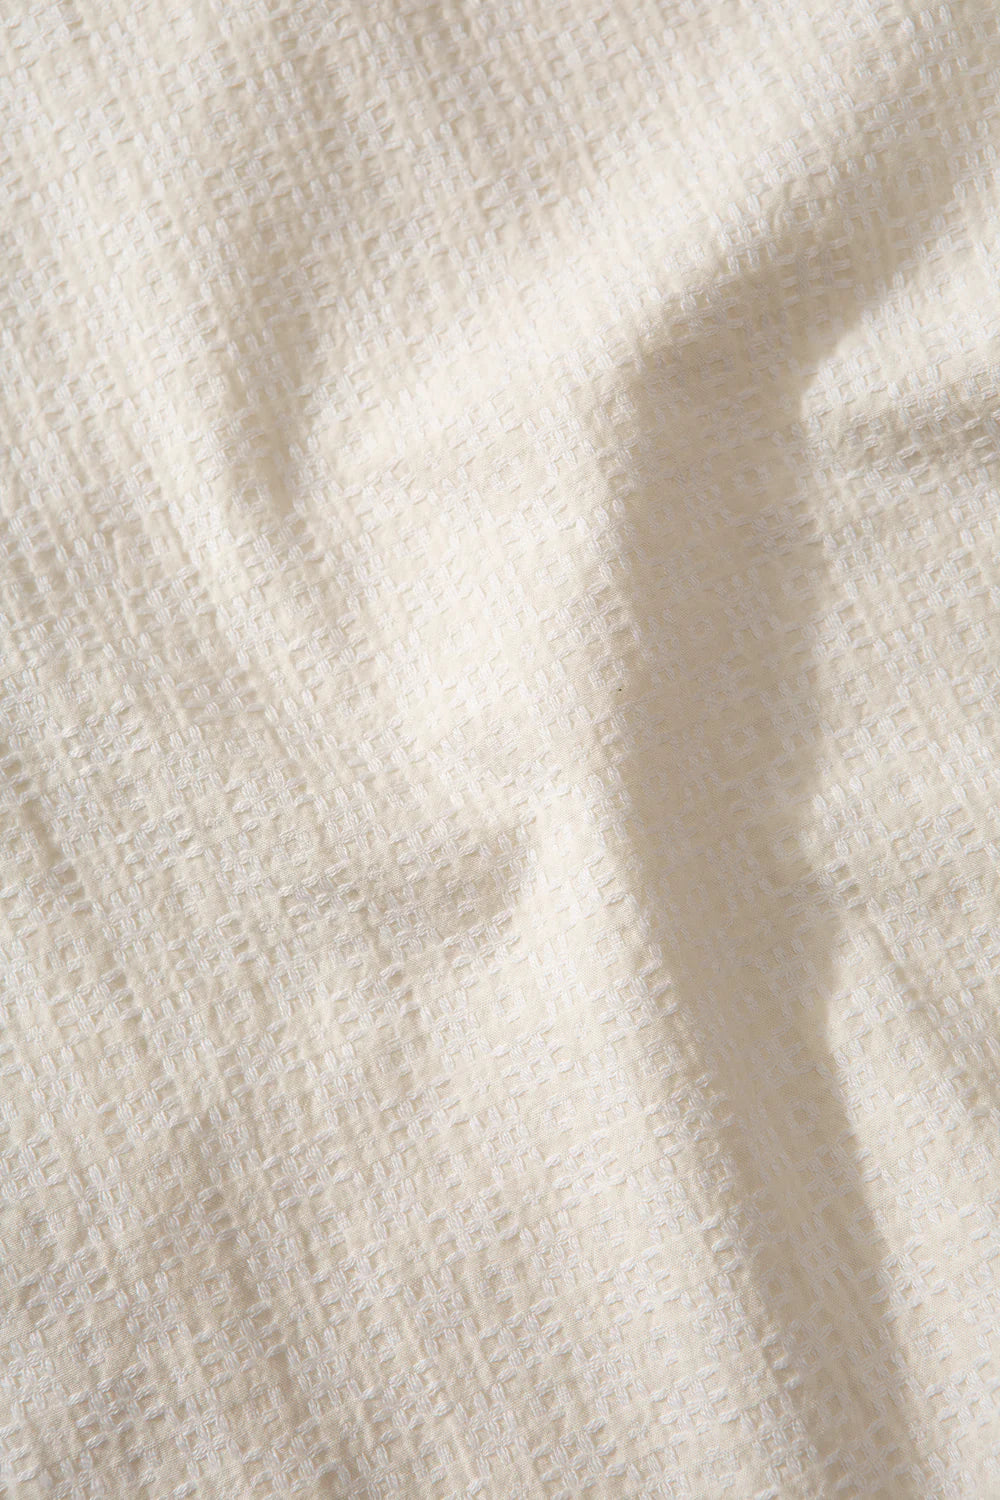 Artisan Short Sleeve Shirt - Plain Off White